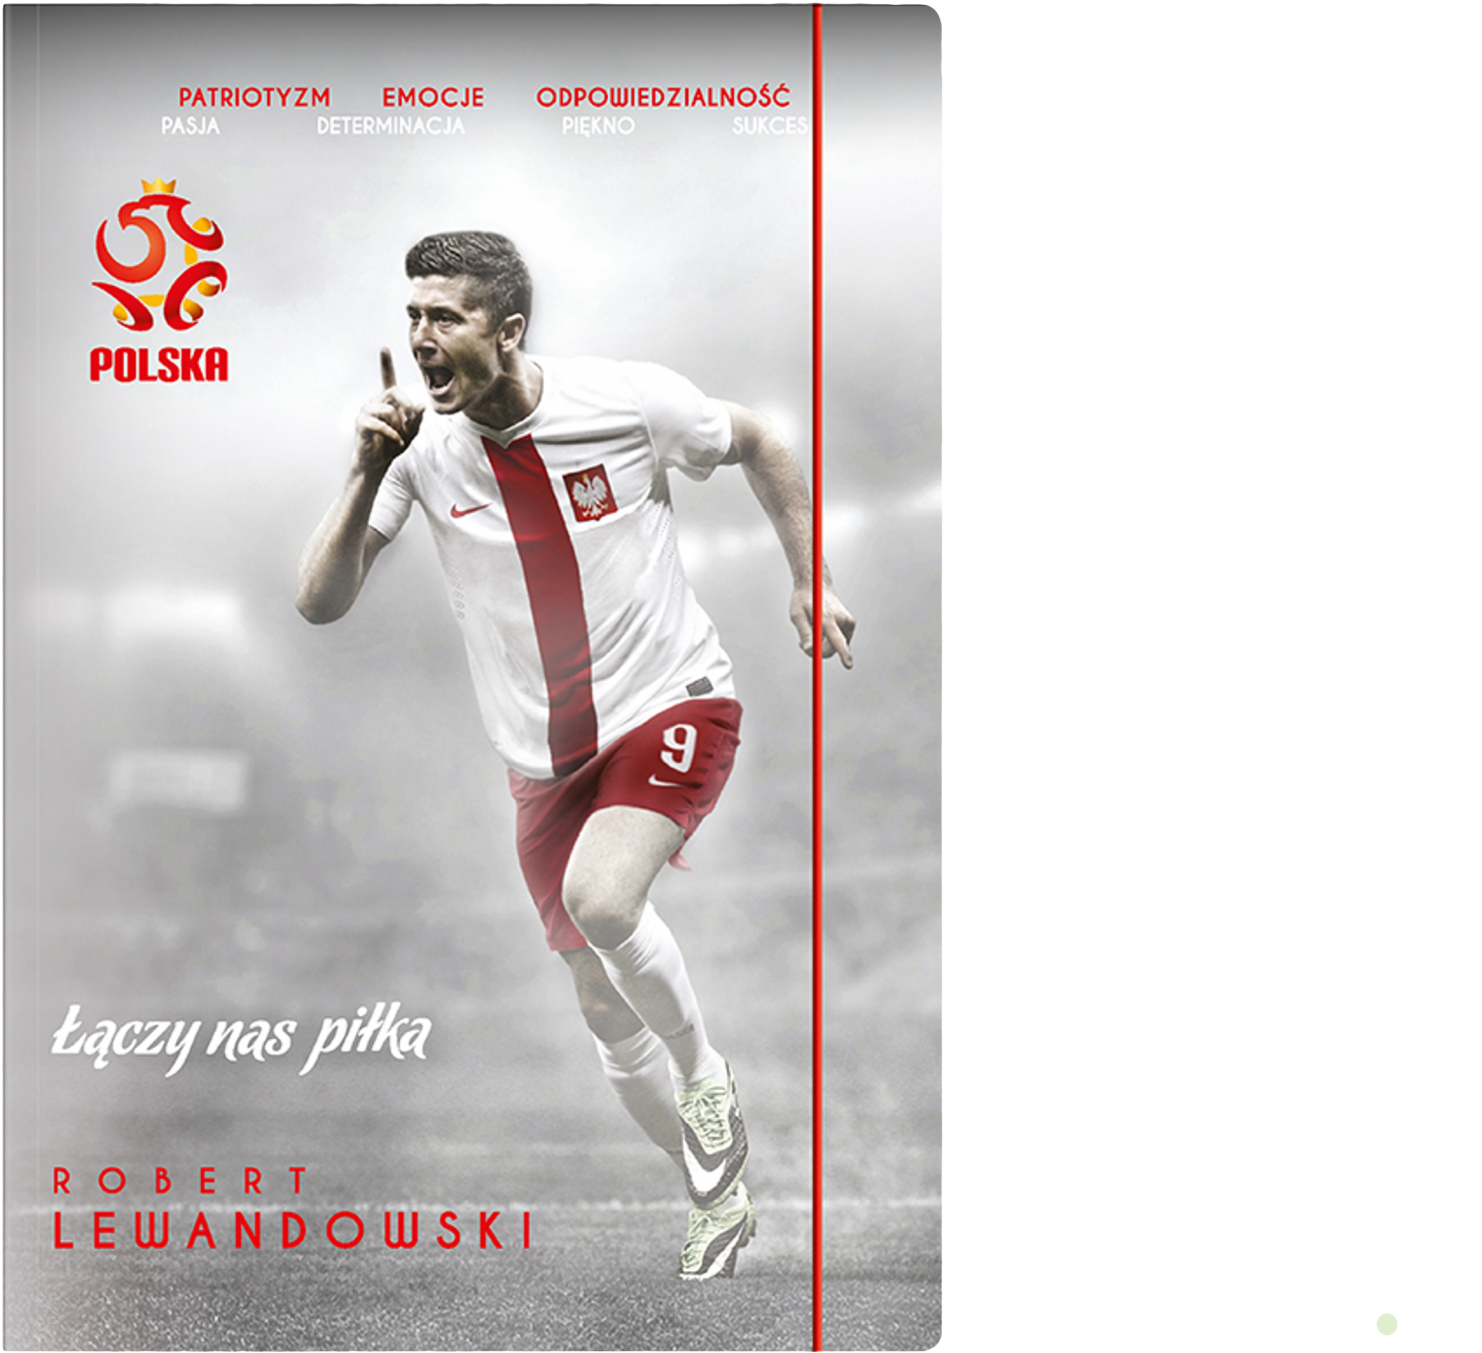 Lewandowski Poland Football Patriotism Poster PNG